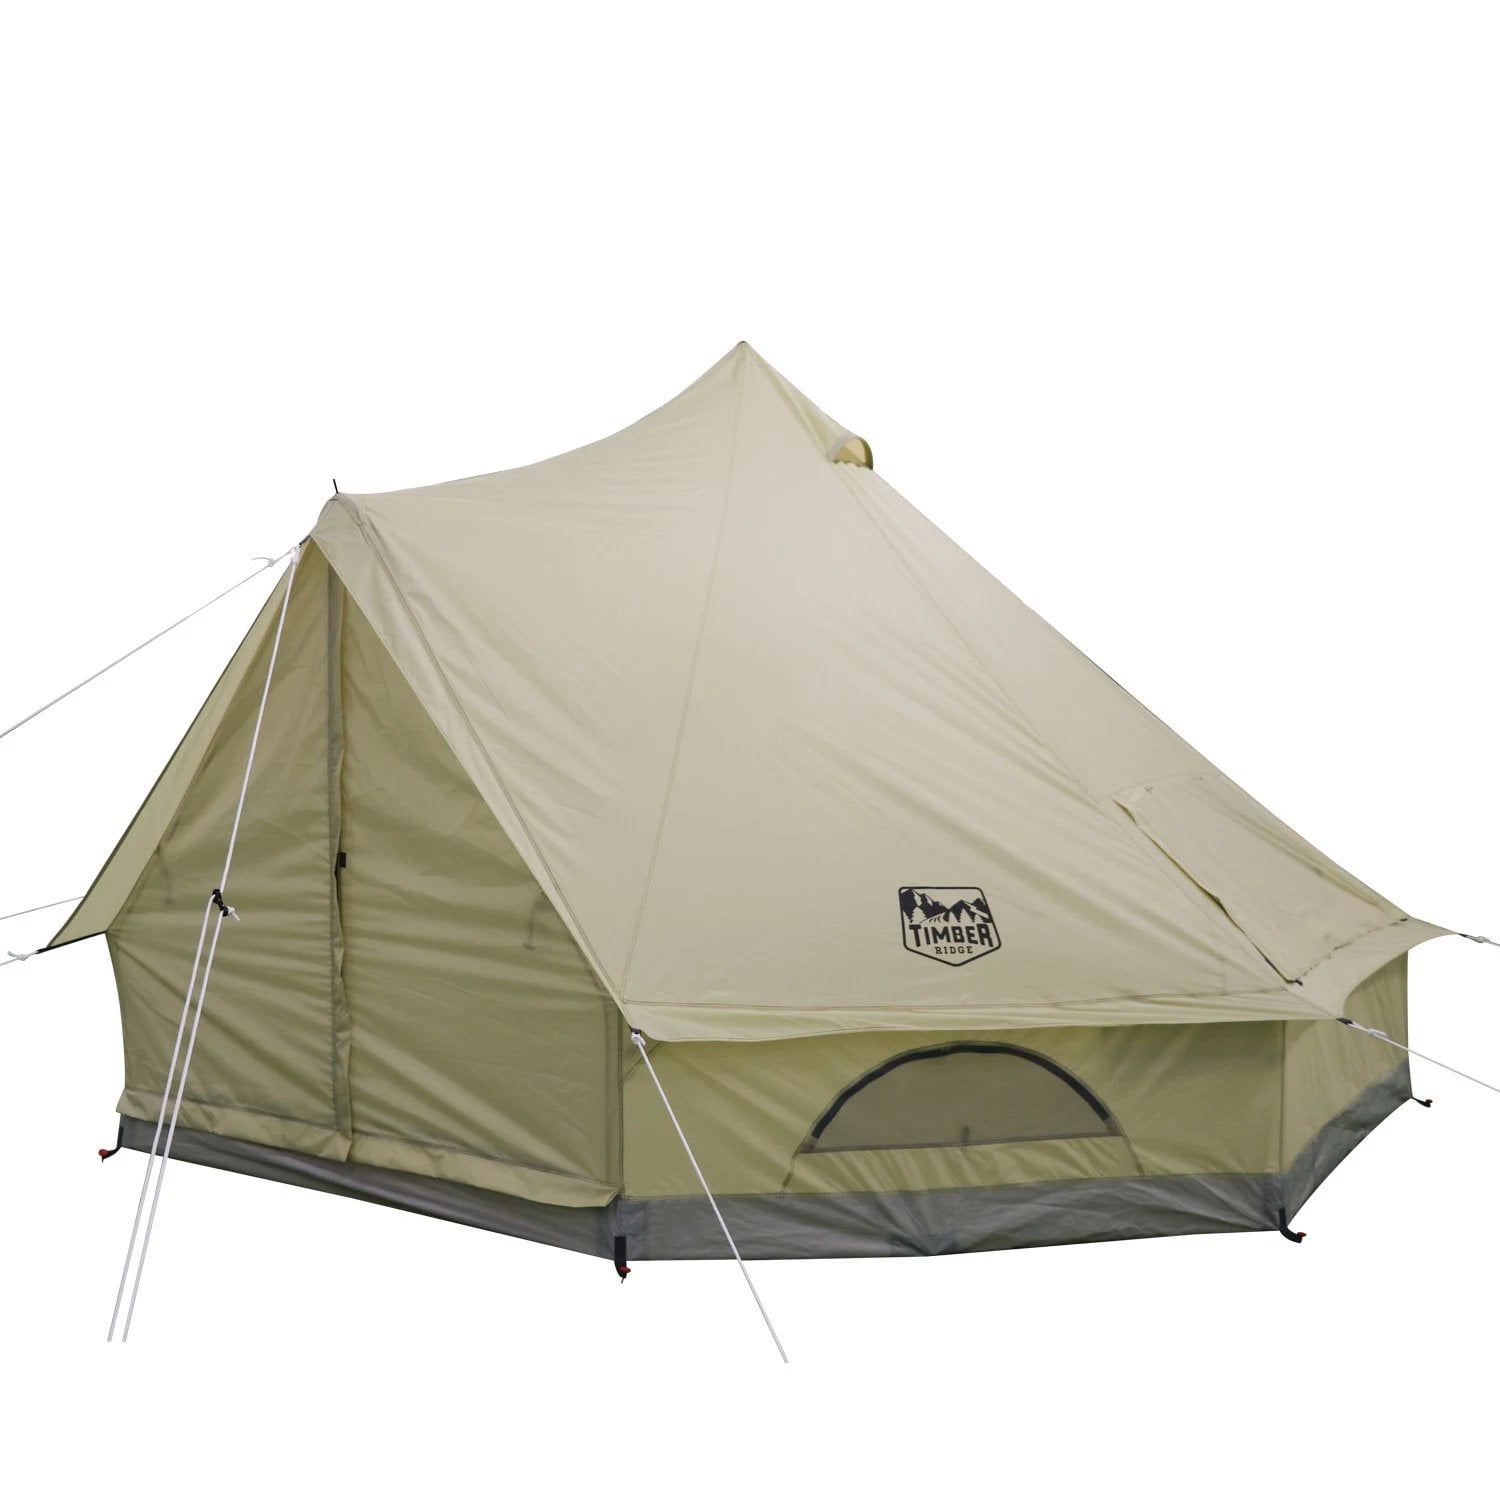 Timber Ridge 980382557 6 Person Glamping Tent